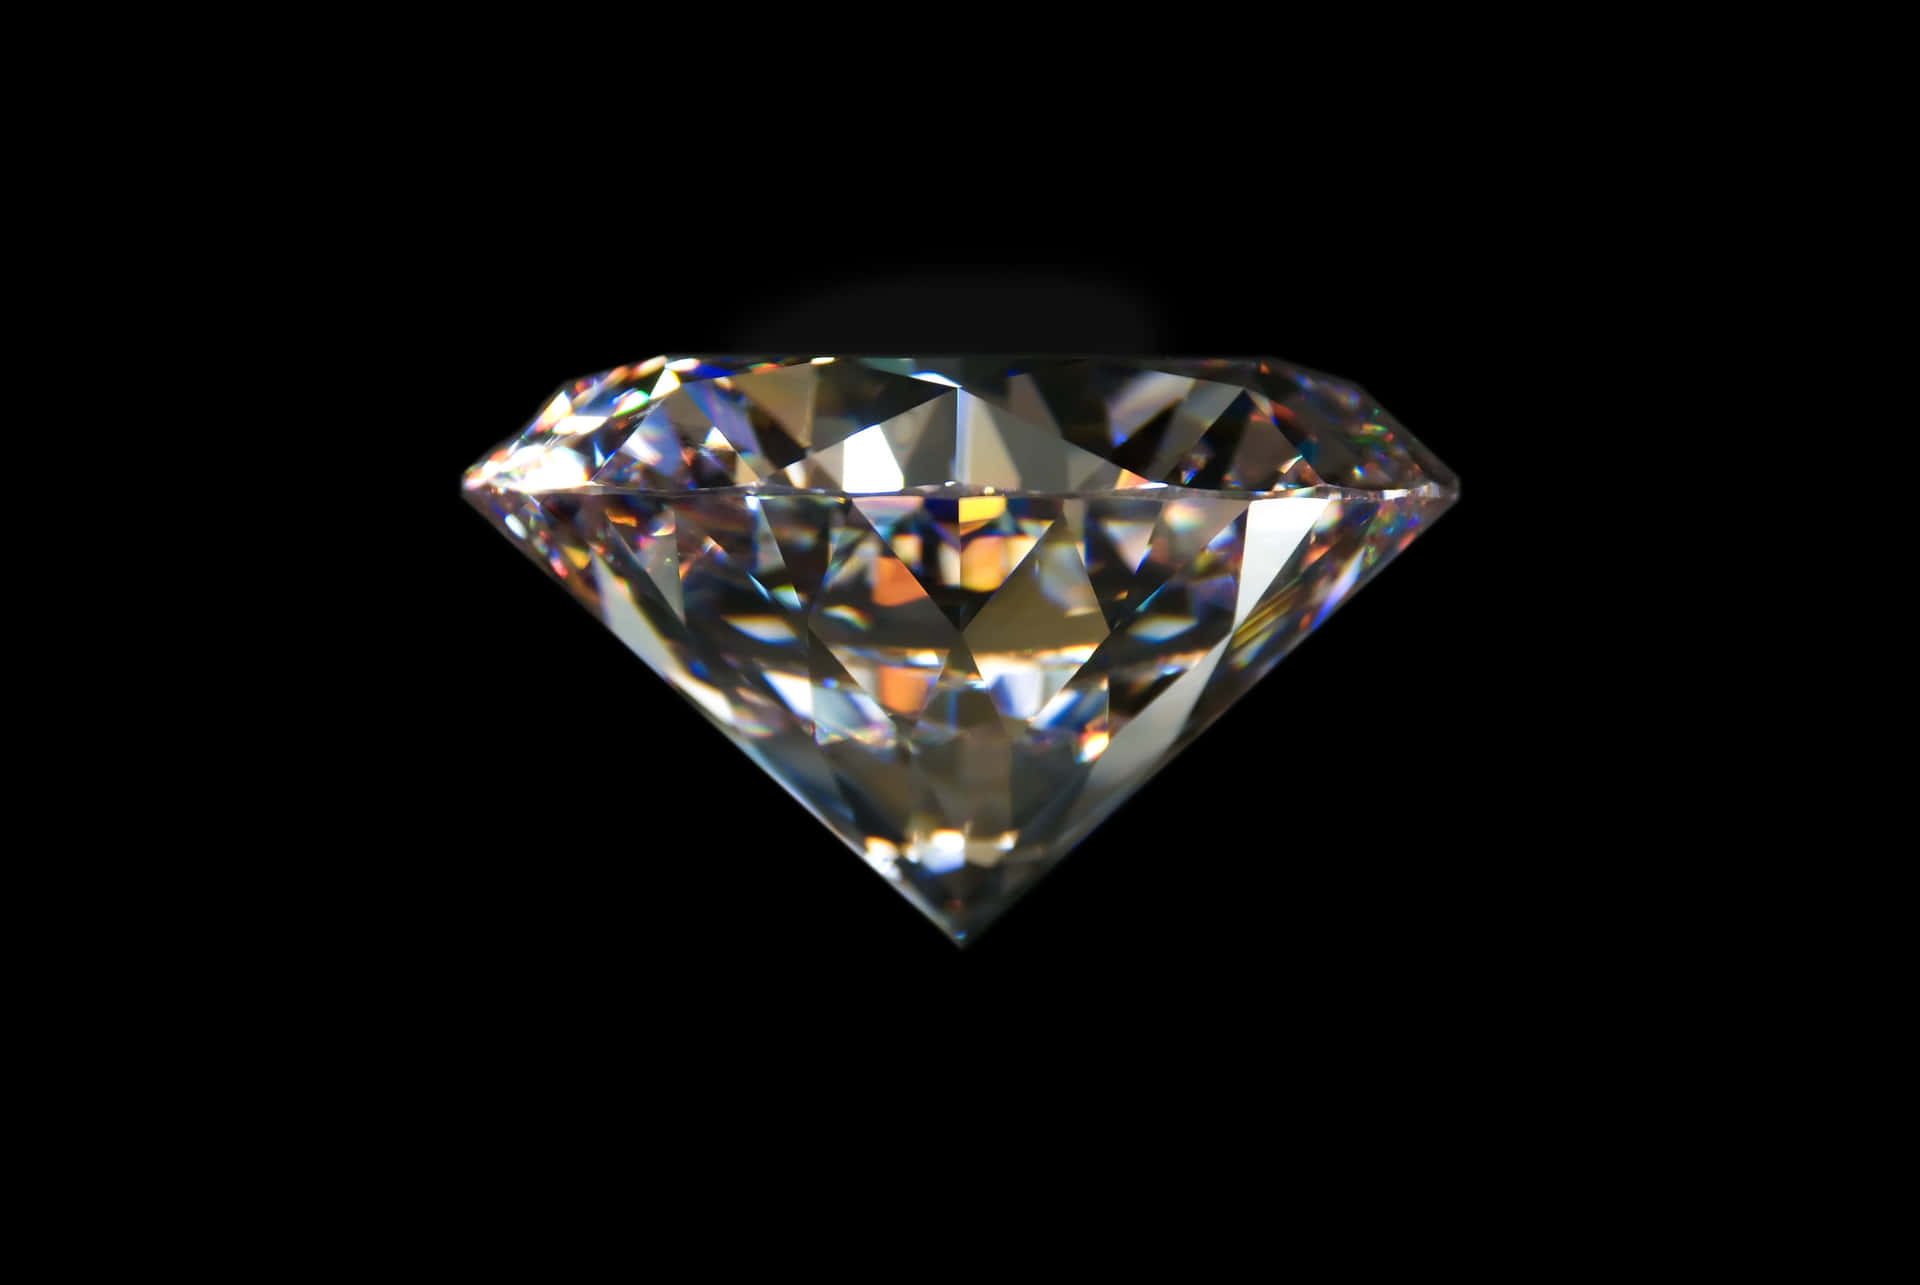 Skinnende,funklende Diamanter Sat Mod En Sort Baggrund.